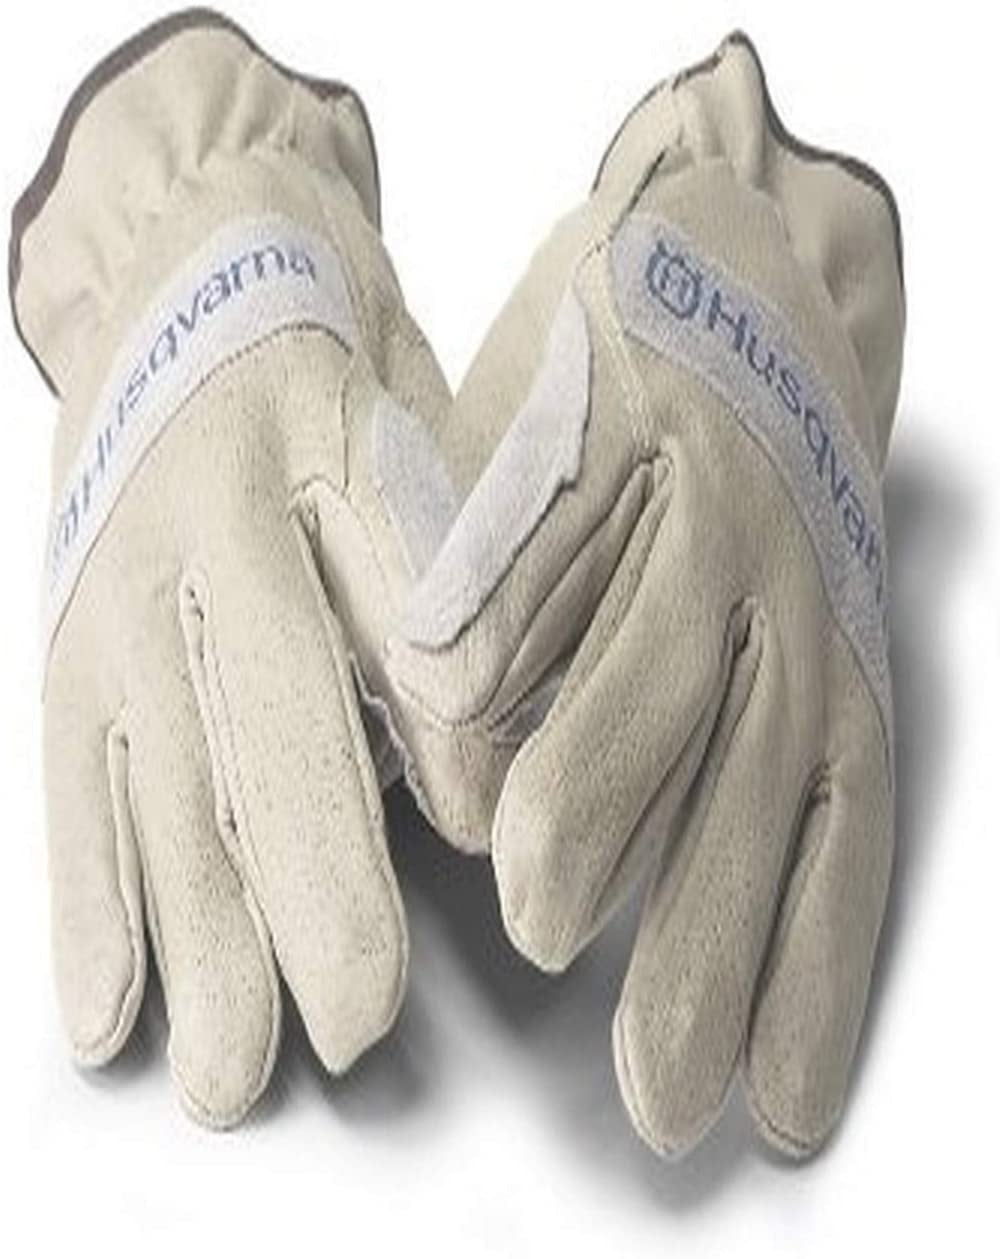 Husqvarna 531300274 Extreme Duty Work Gloves White Large